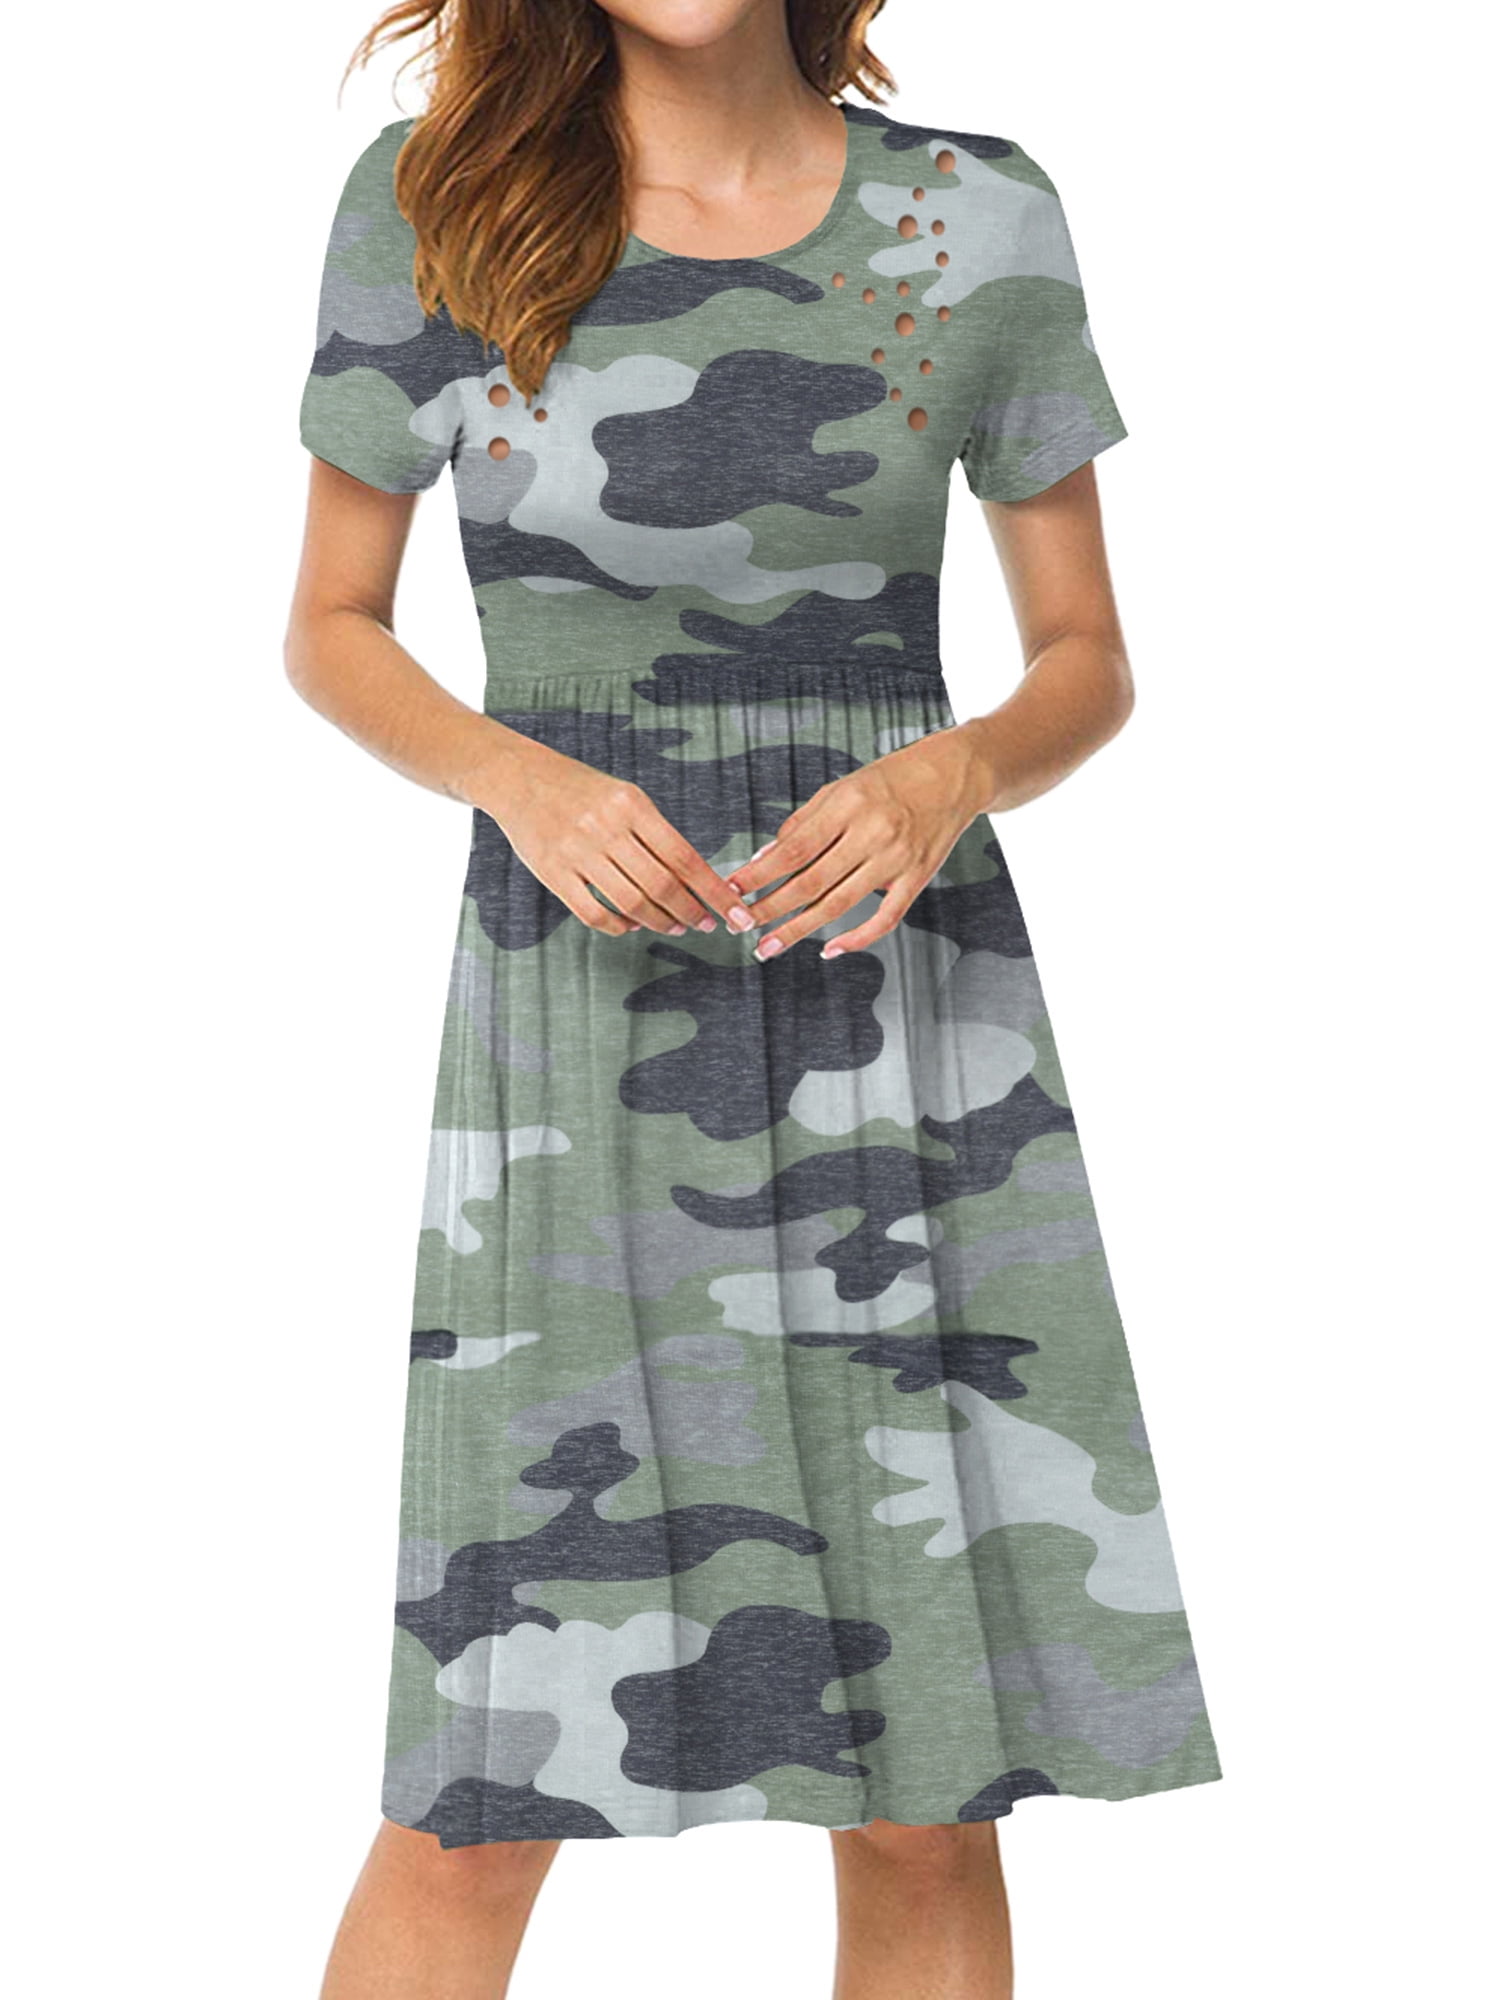 Hubery - HUBERY Women Camouflage Print Ruched Cutout Hole Pockets Short ...